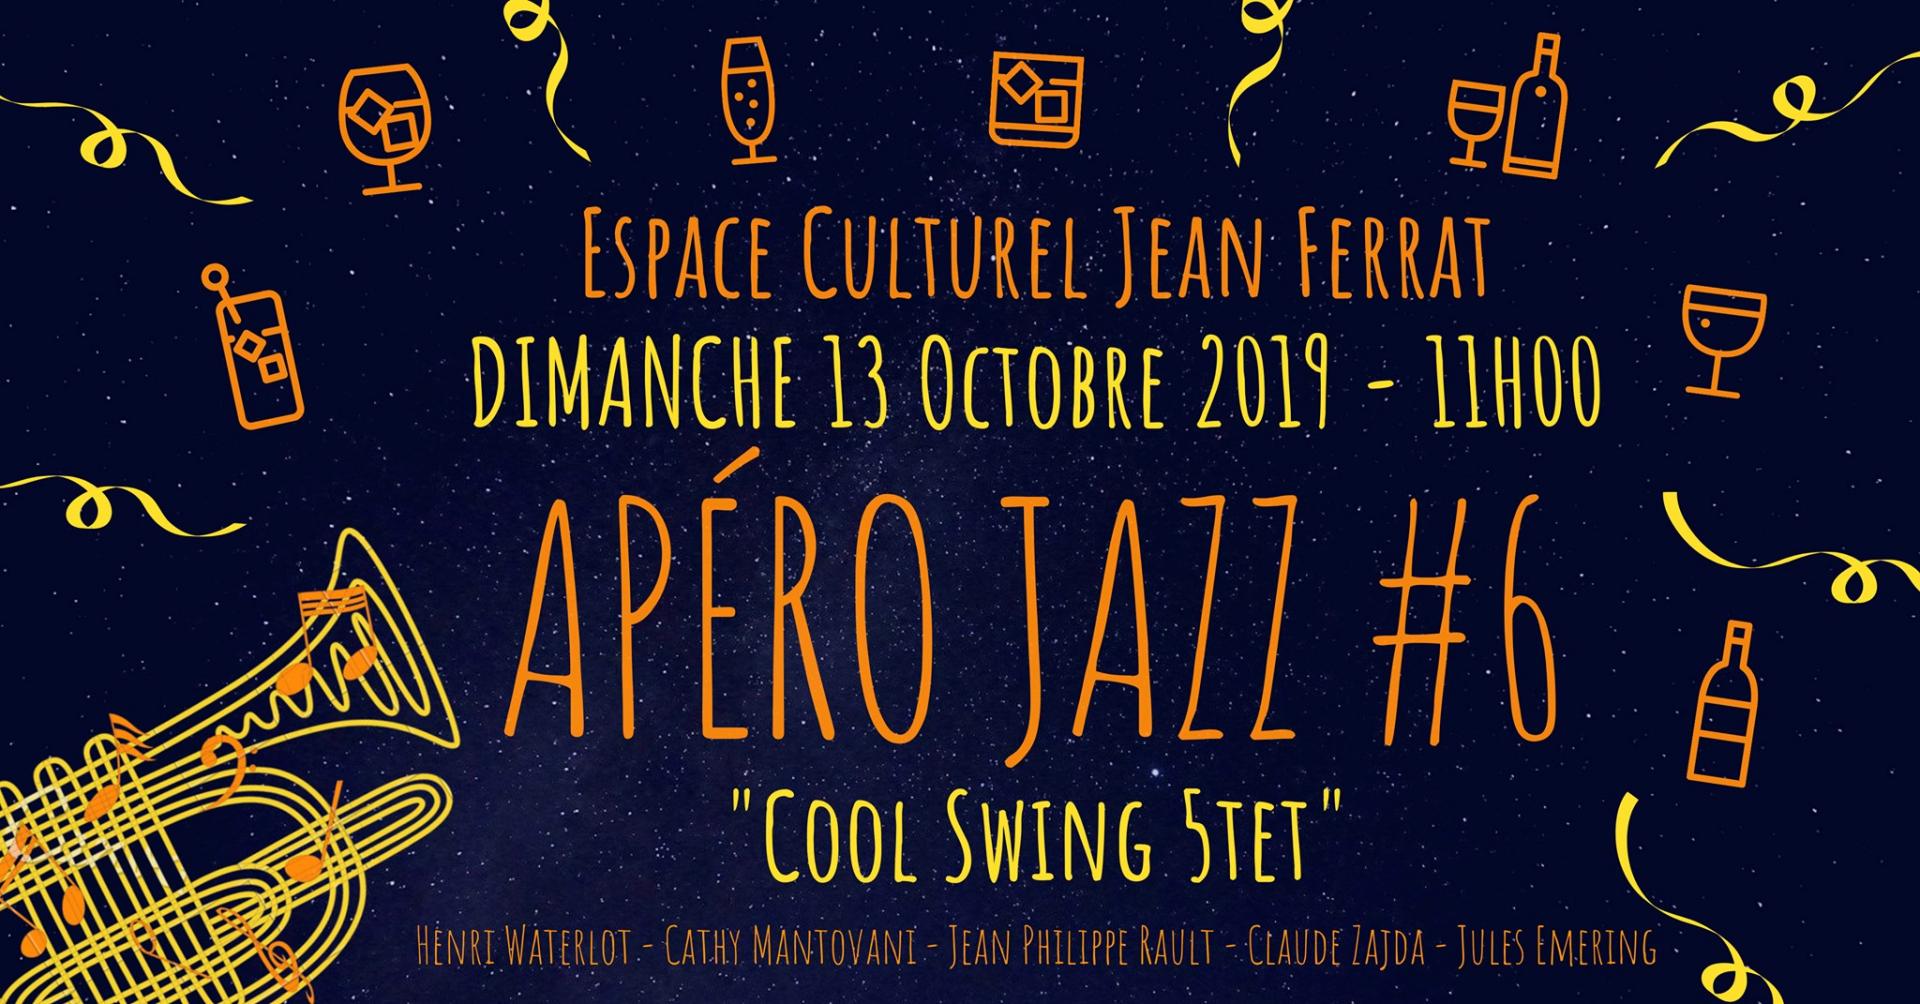 Apéro Jazz #6 - Coolswing 5tet